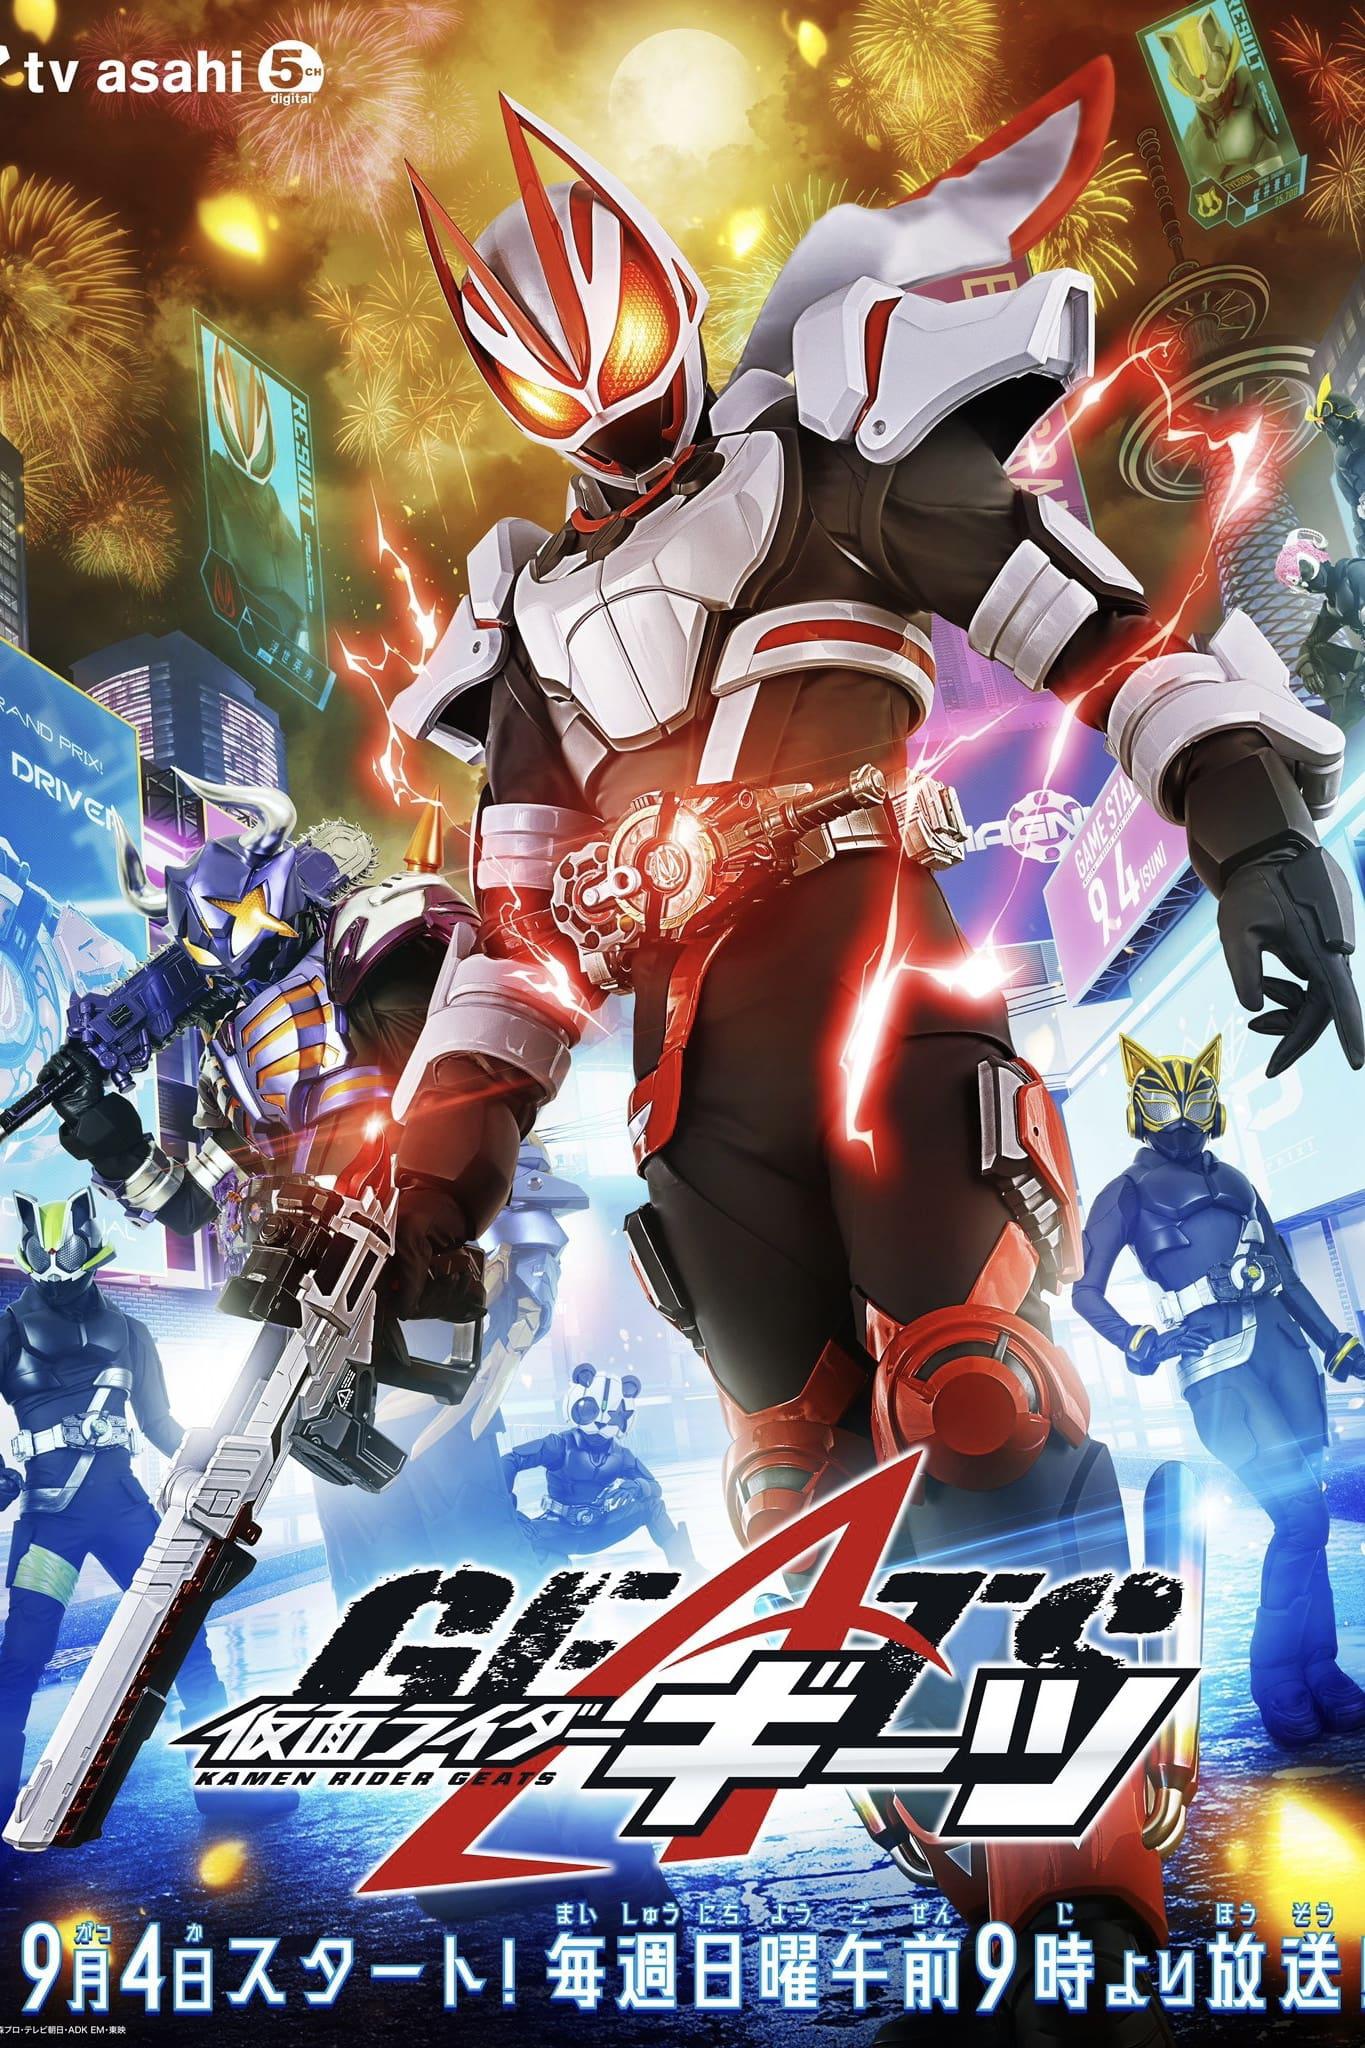 TV ratings for Kamen Rider Geats (仮面ライダーギーツ) in South Africa. TV Asahi TV series